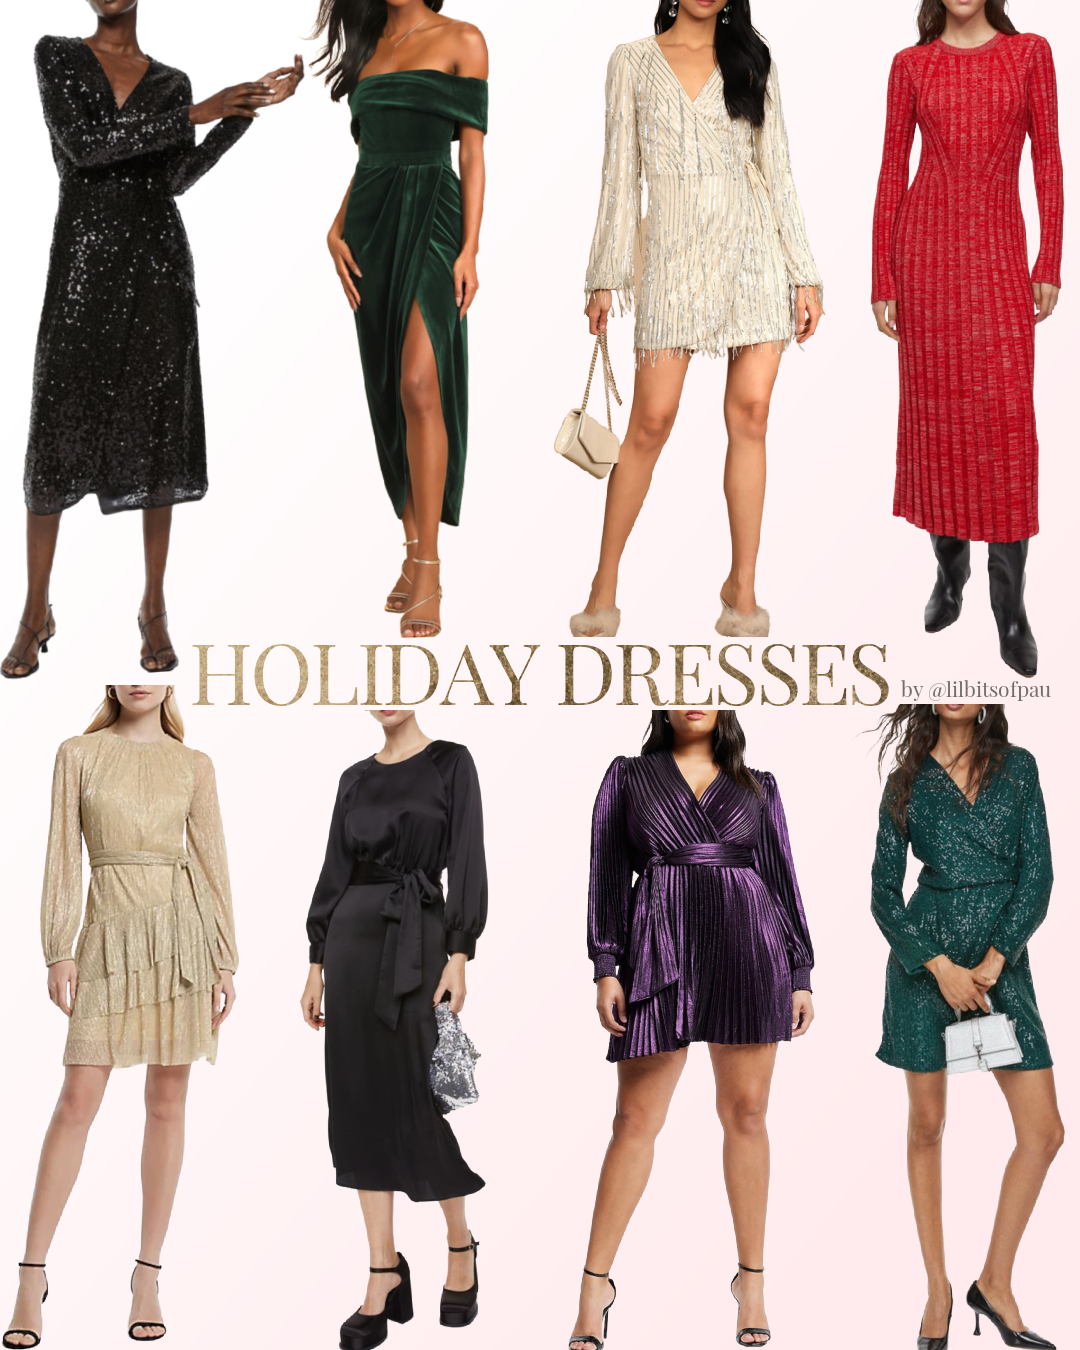 Festive Holiday Dresses, 8 Holiday dress ideas